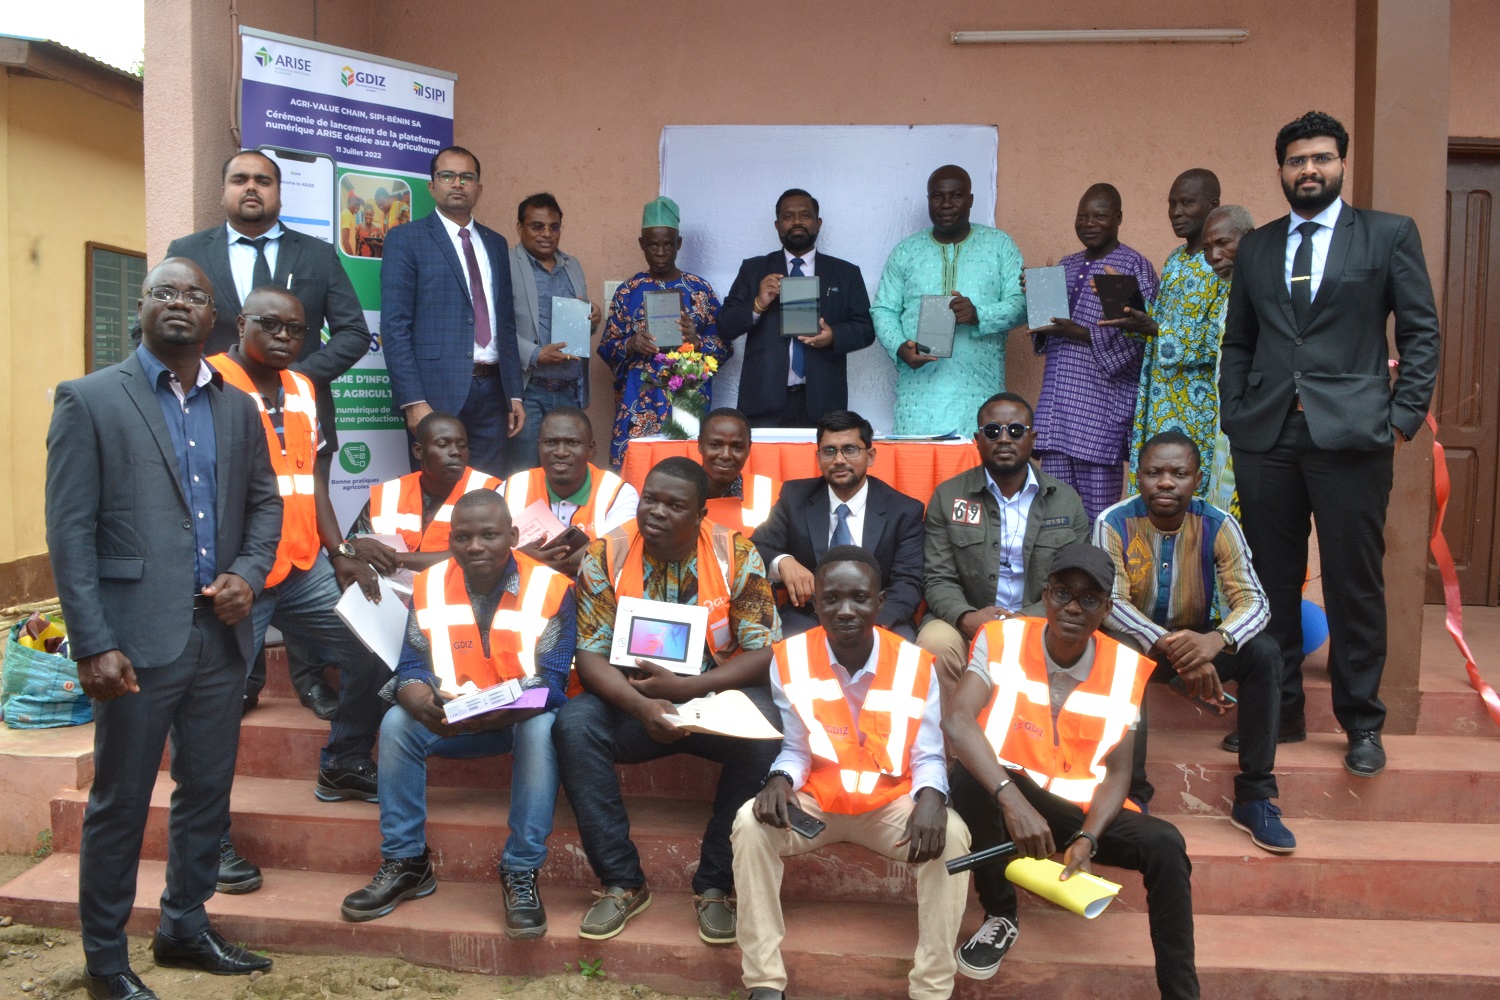 SIPI-Benin SA launches a “AFIS Digital Platform” for Benin farmers